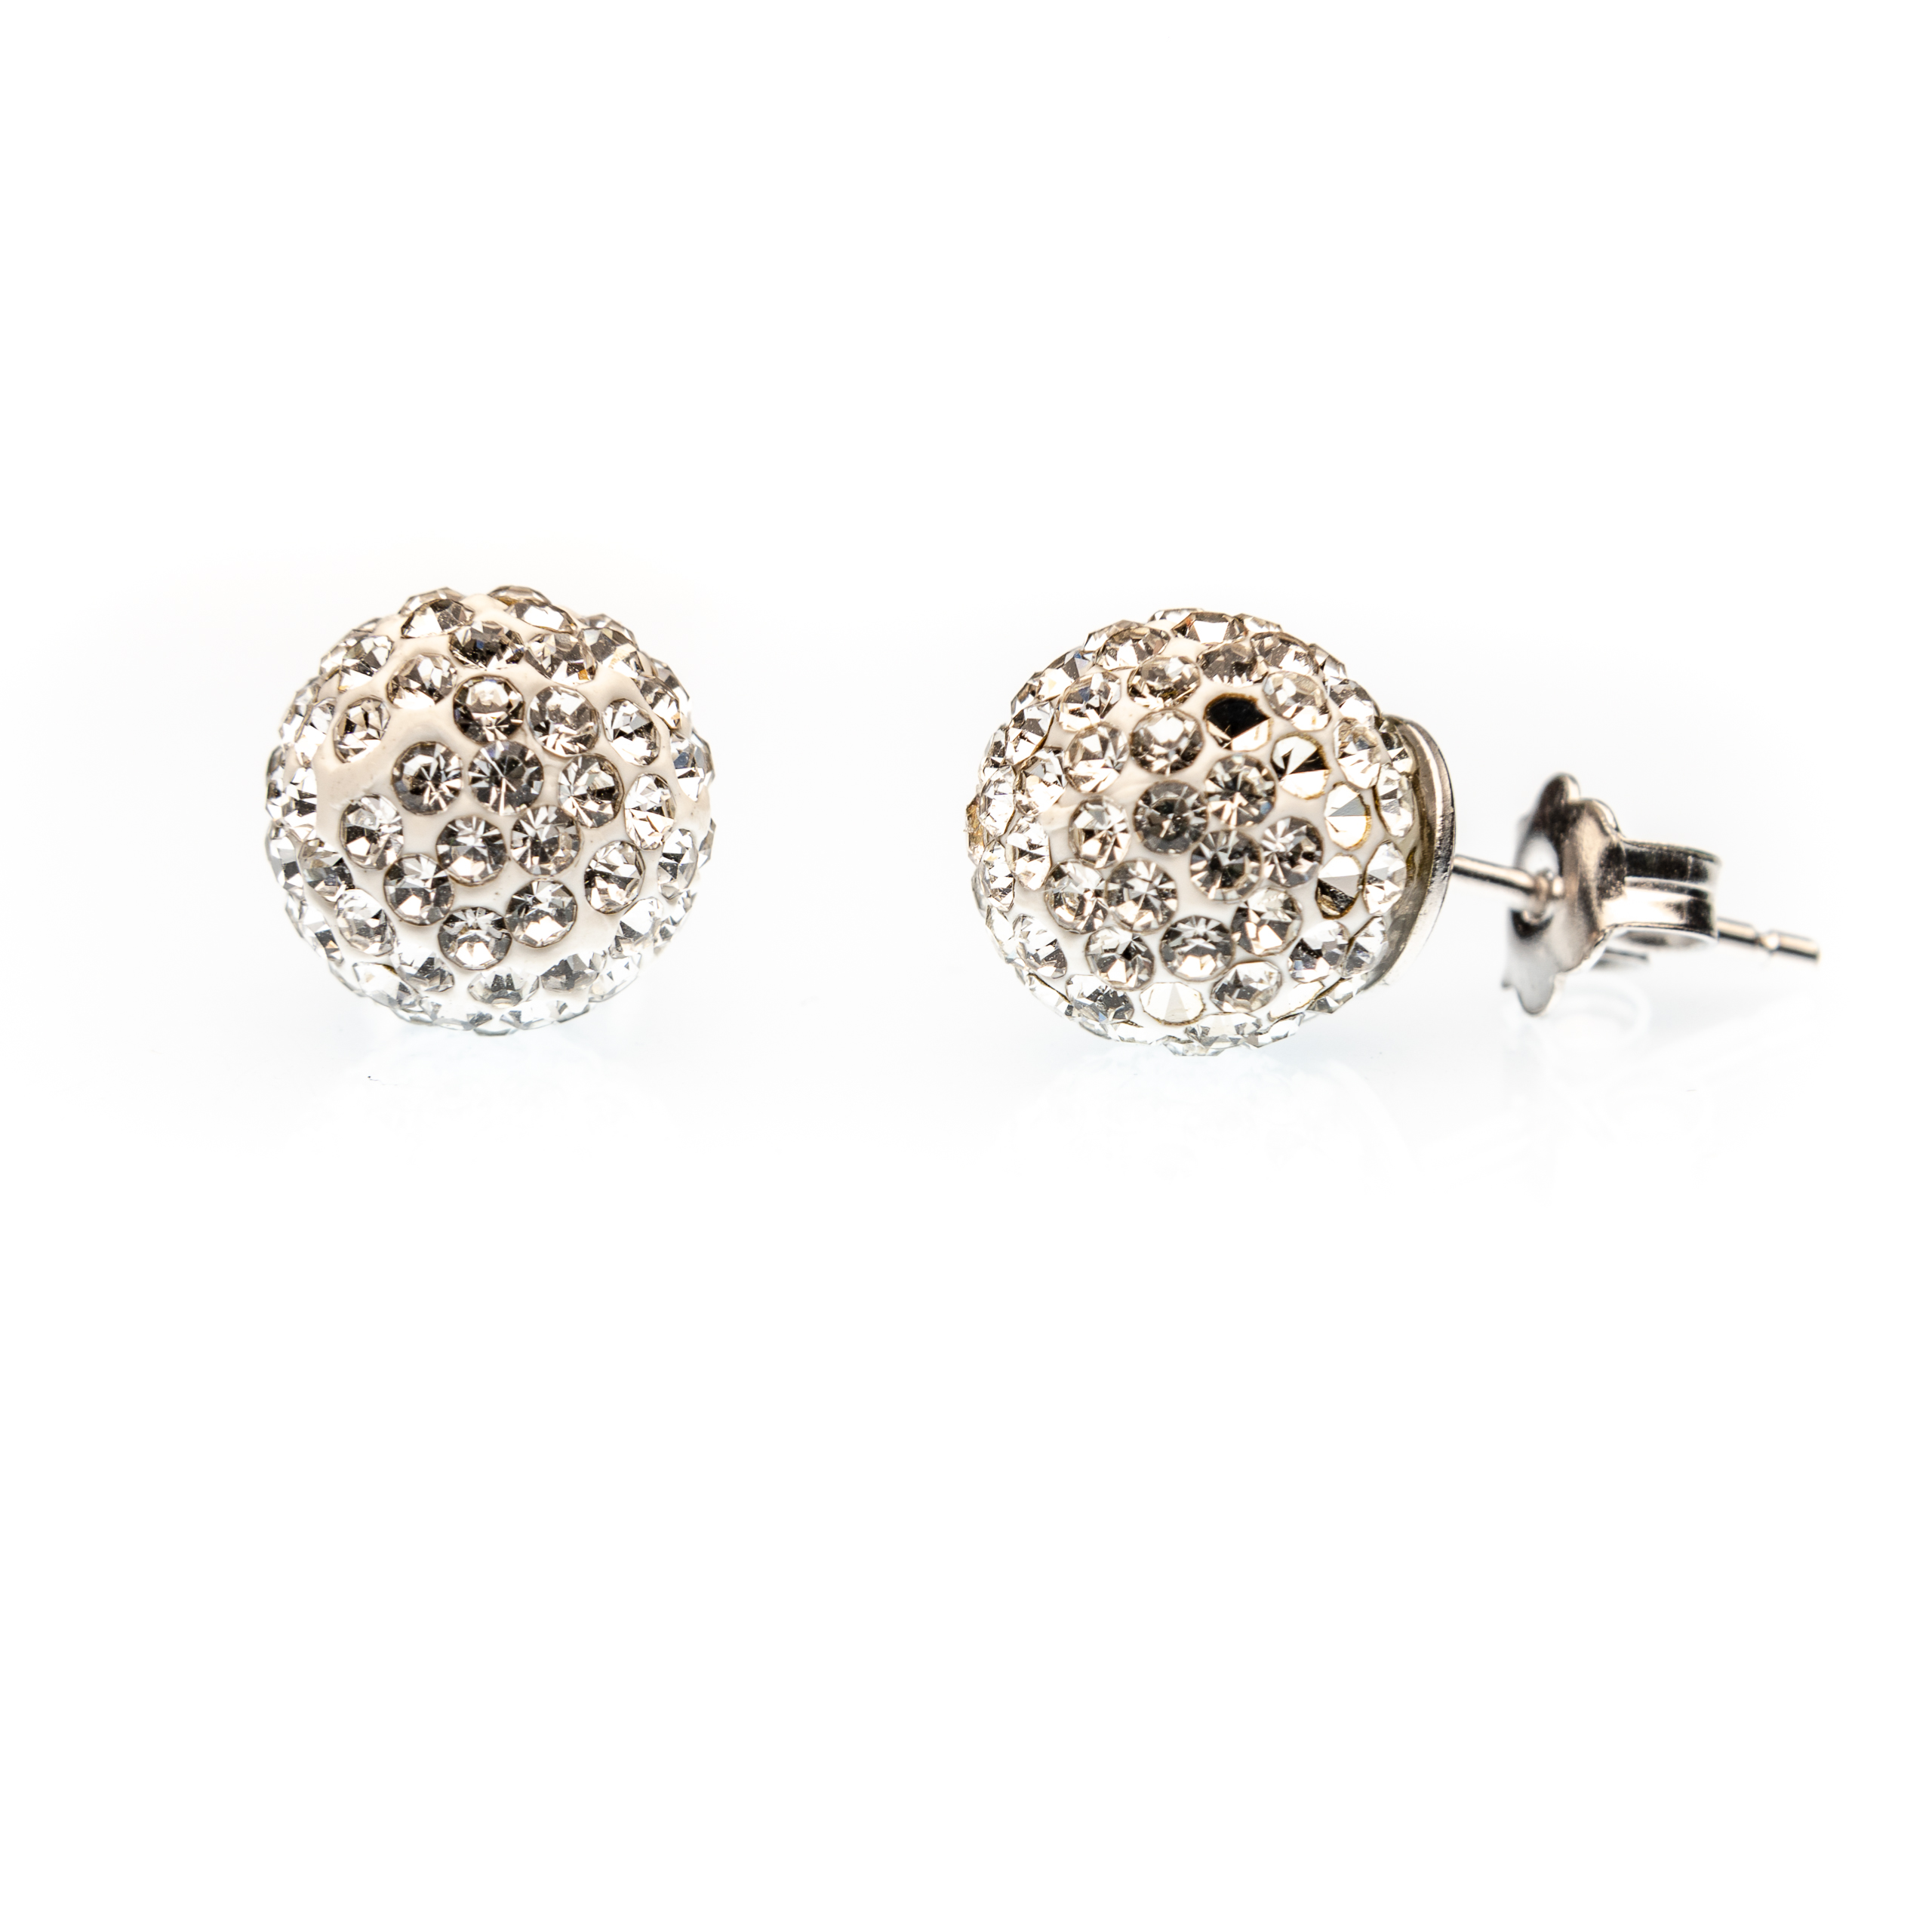 Earrings with rhinestone ball